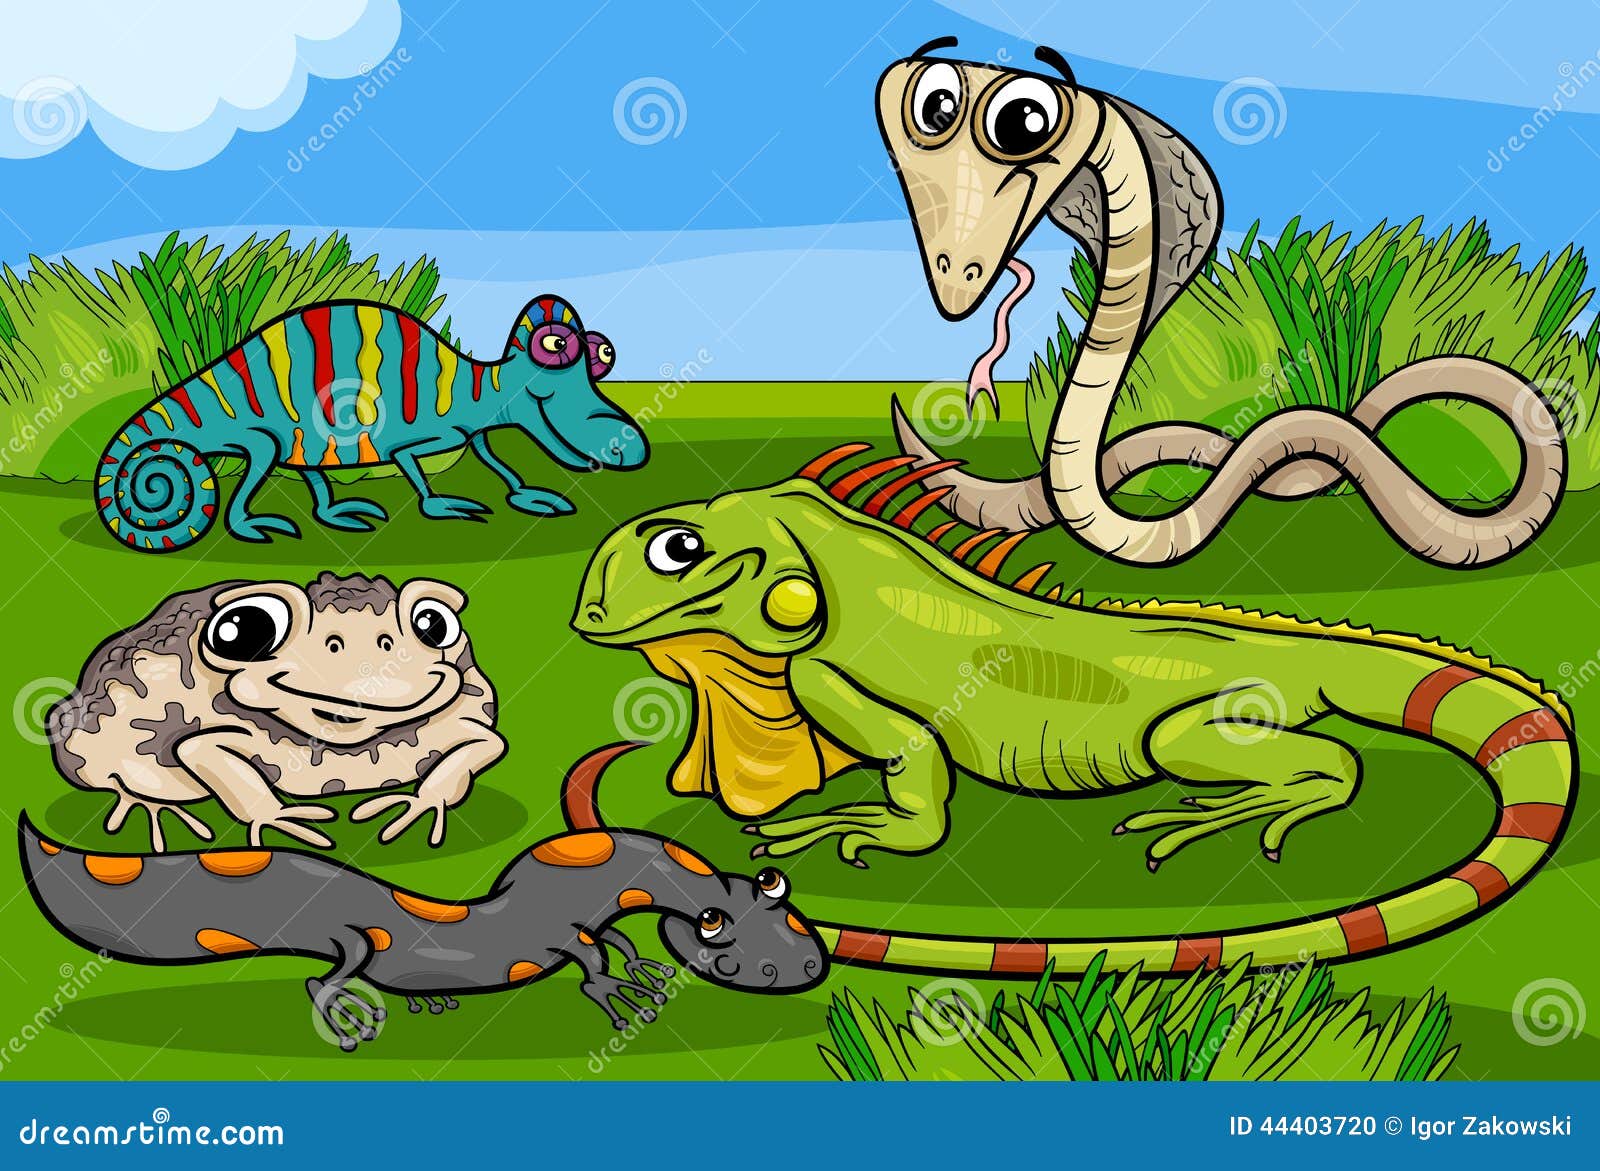 reptiles and amphibians group cartoon